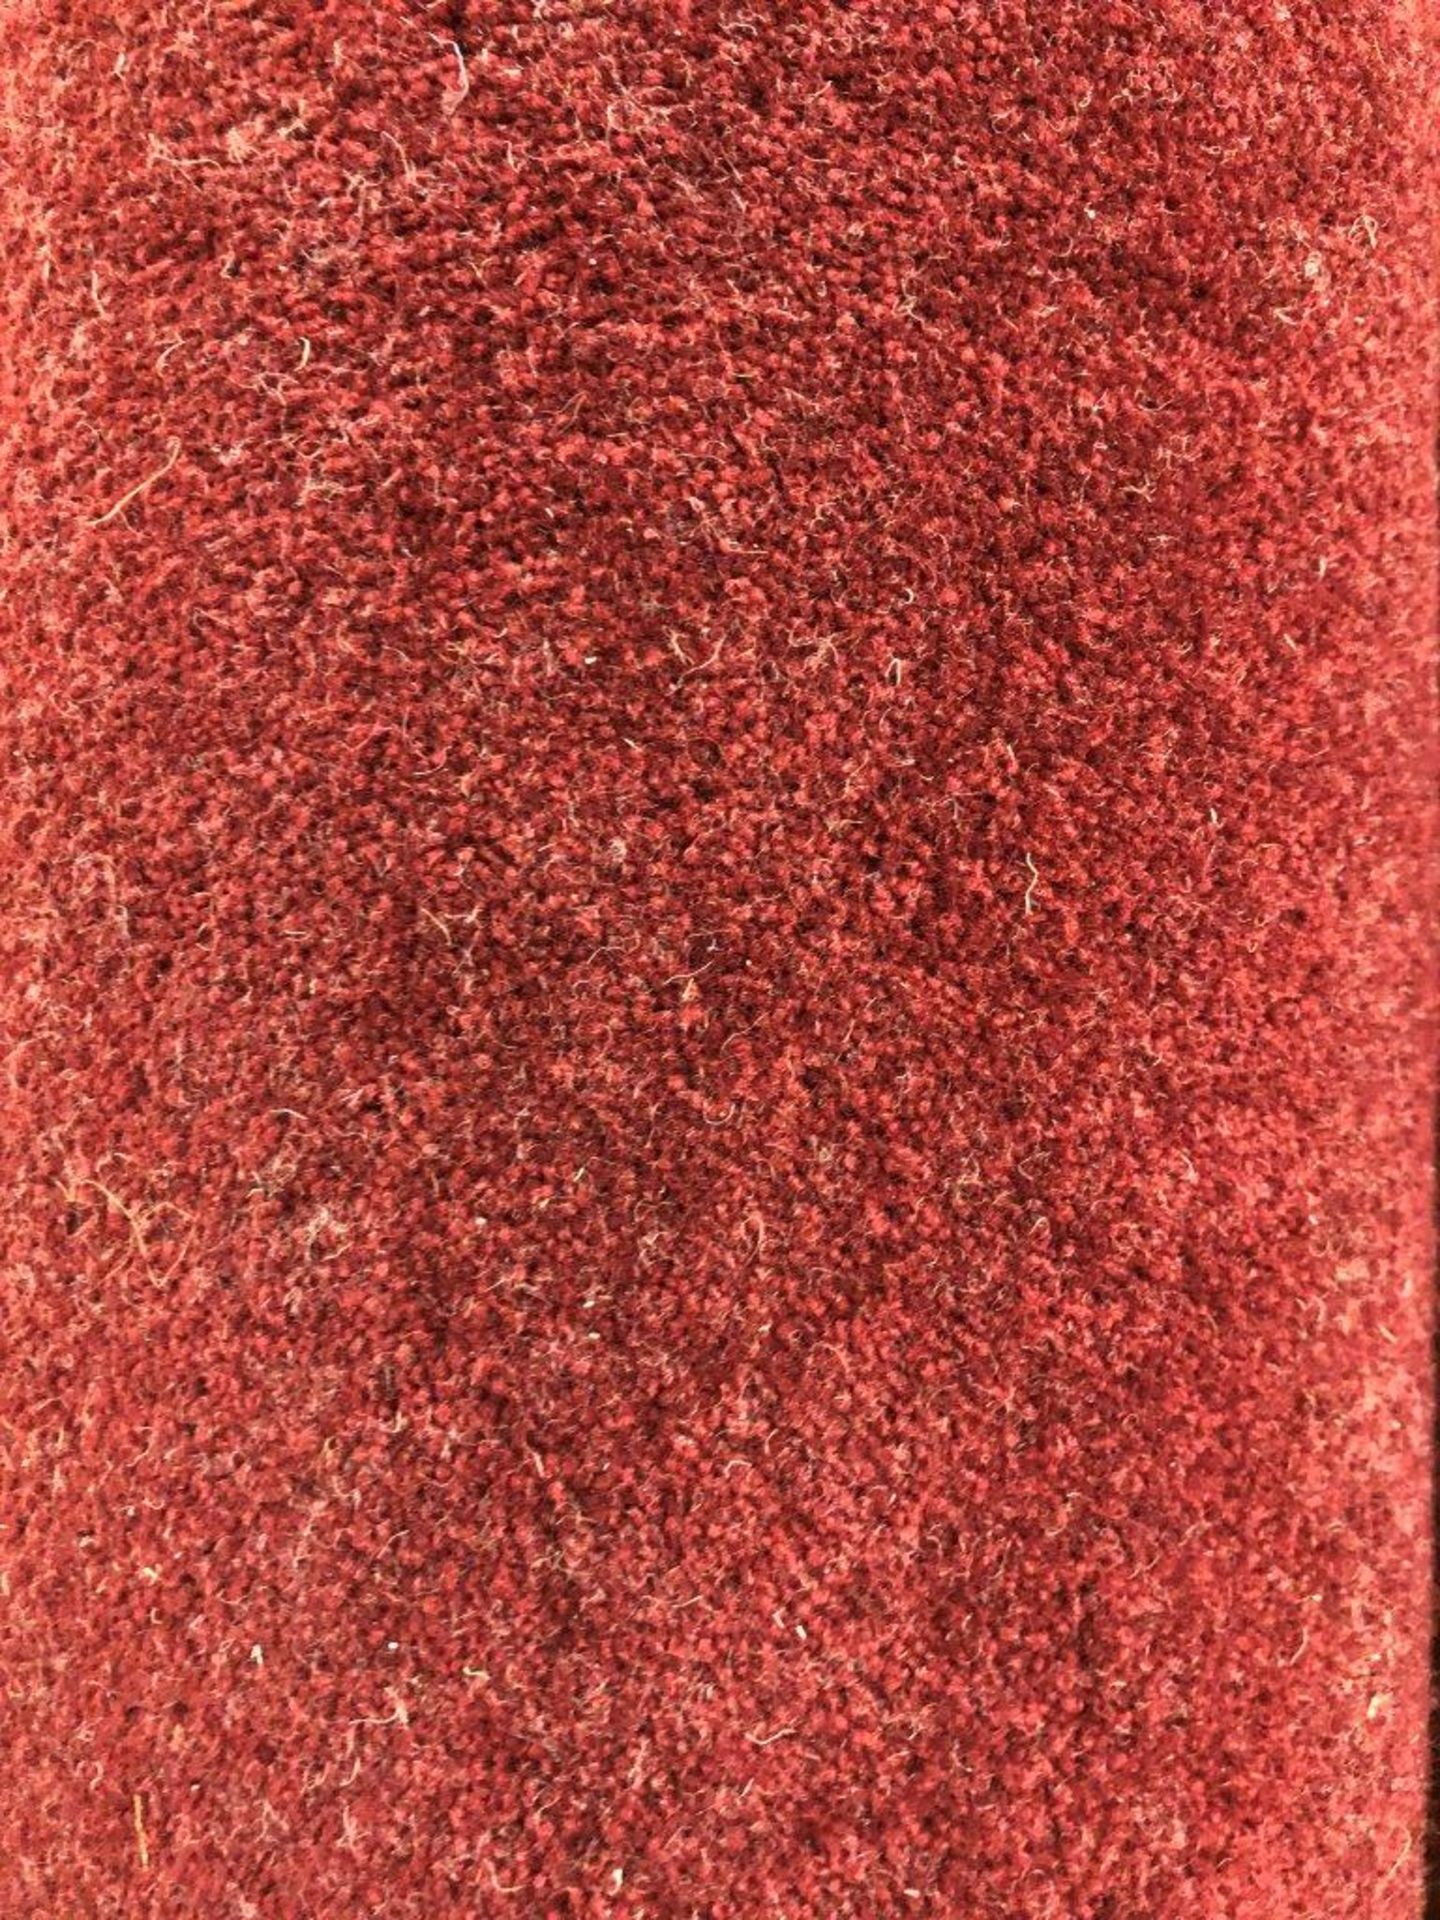 1 x Ryalux Carpet End Roll - Maroon 4.5x4.0m2 - Image 3 of 3